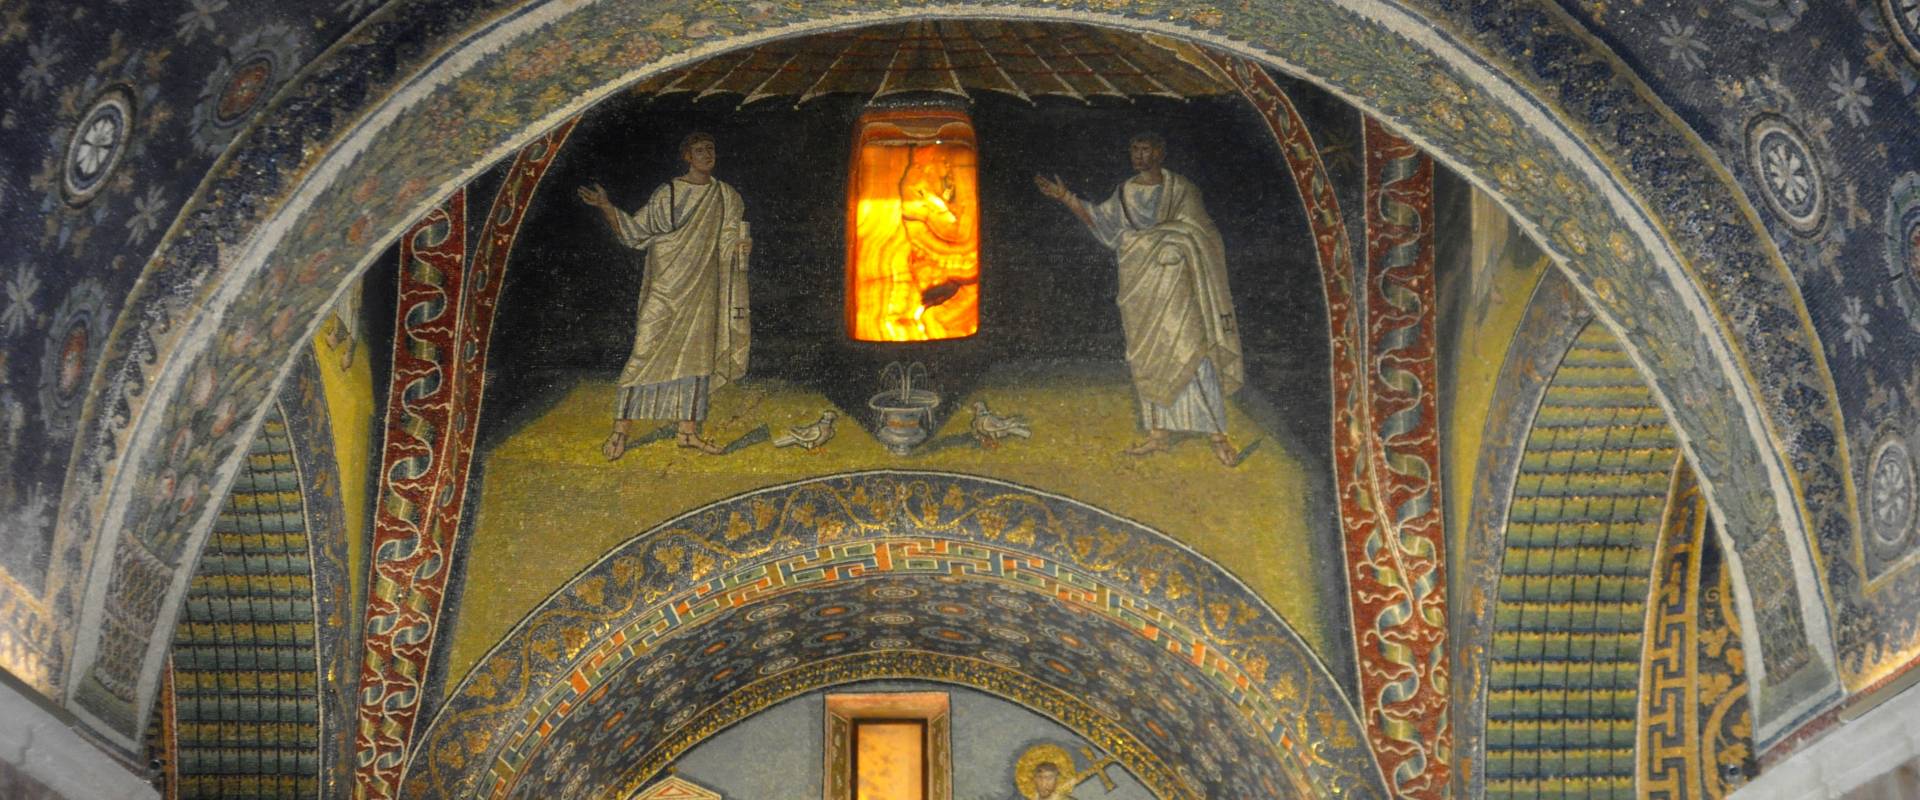 GallaPlacidia mosaicos evangelistas y San Lorenzo photo by Hispalois